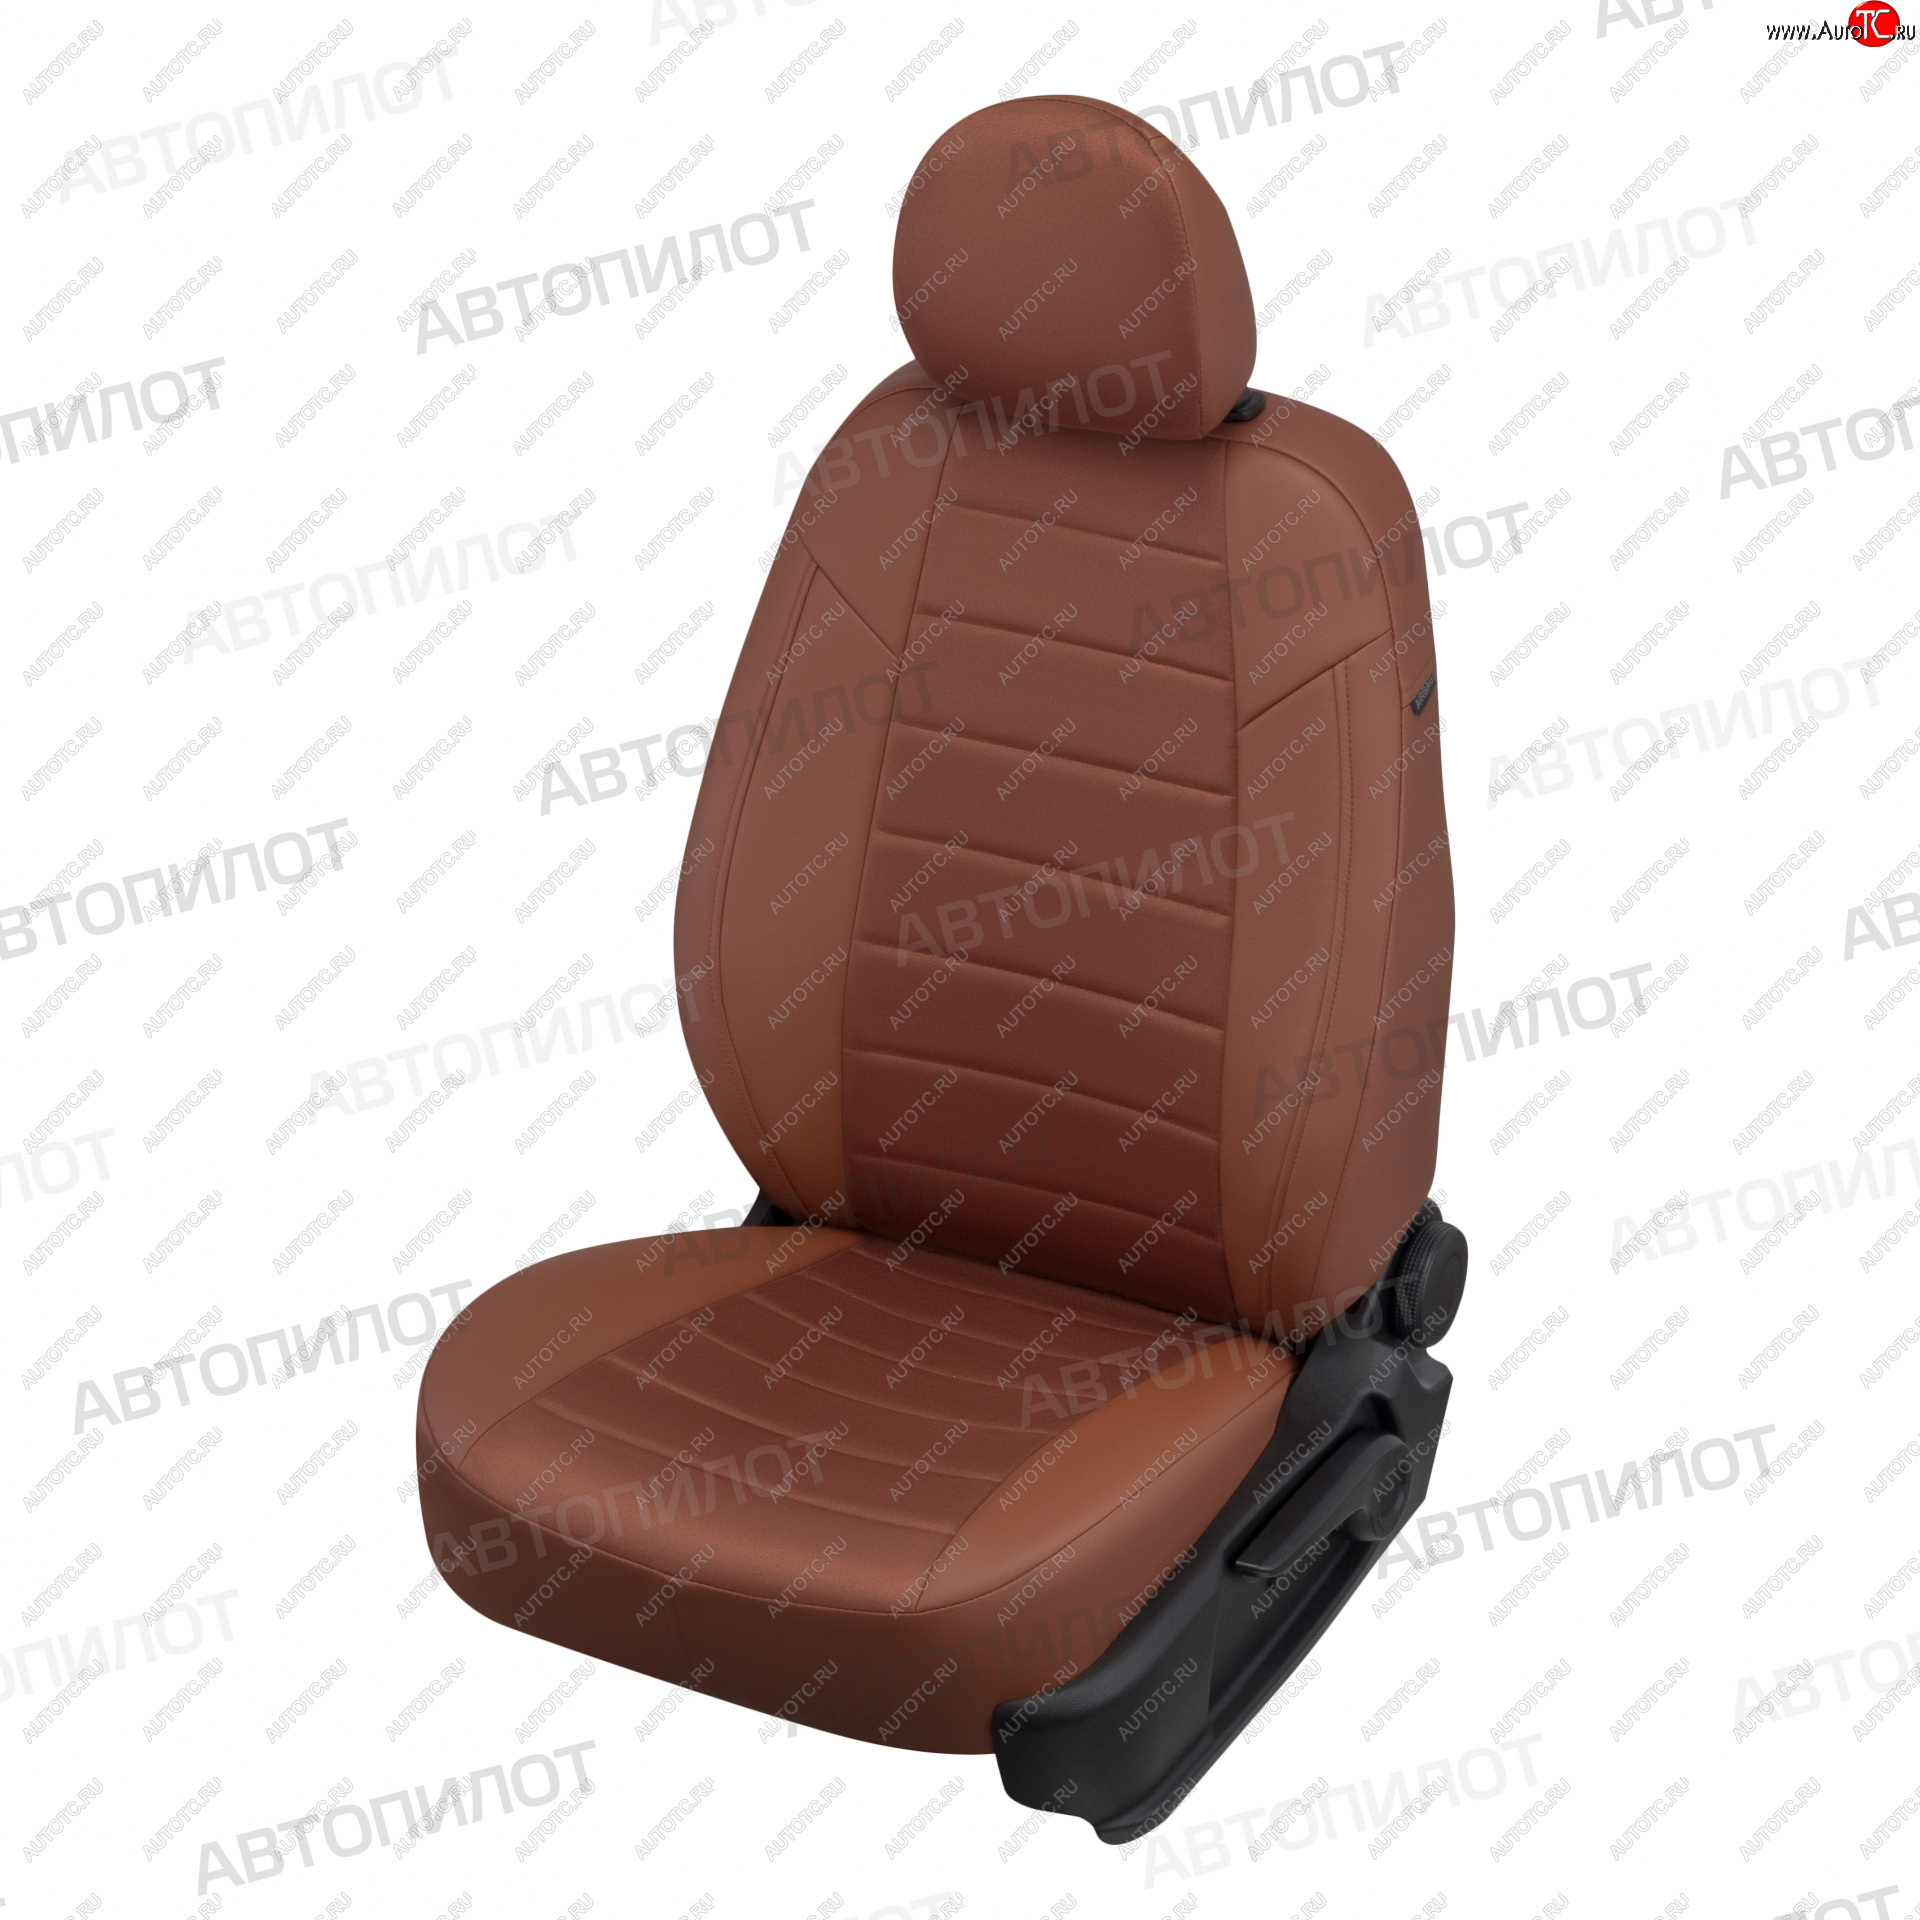 13 449 р. Чехлы сидений (экокожа/алькантара) Автопилот  Hyundai Sonata  EF (2001-2013), KIA Magentis (2000-2005) (коричневый)